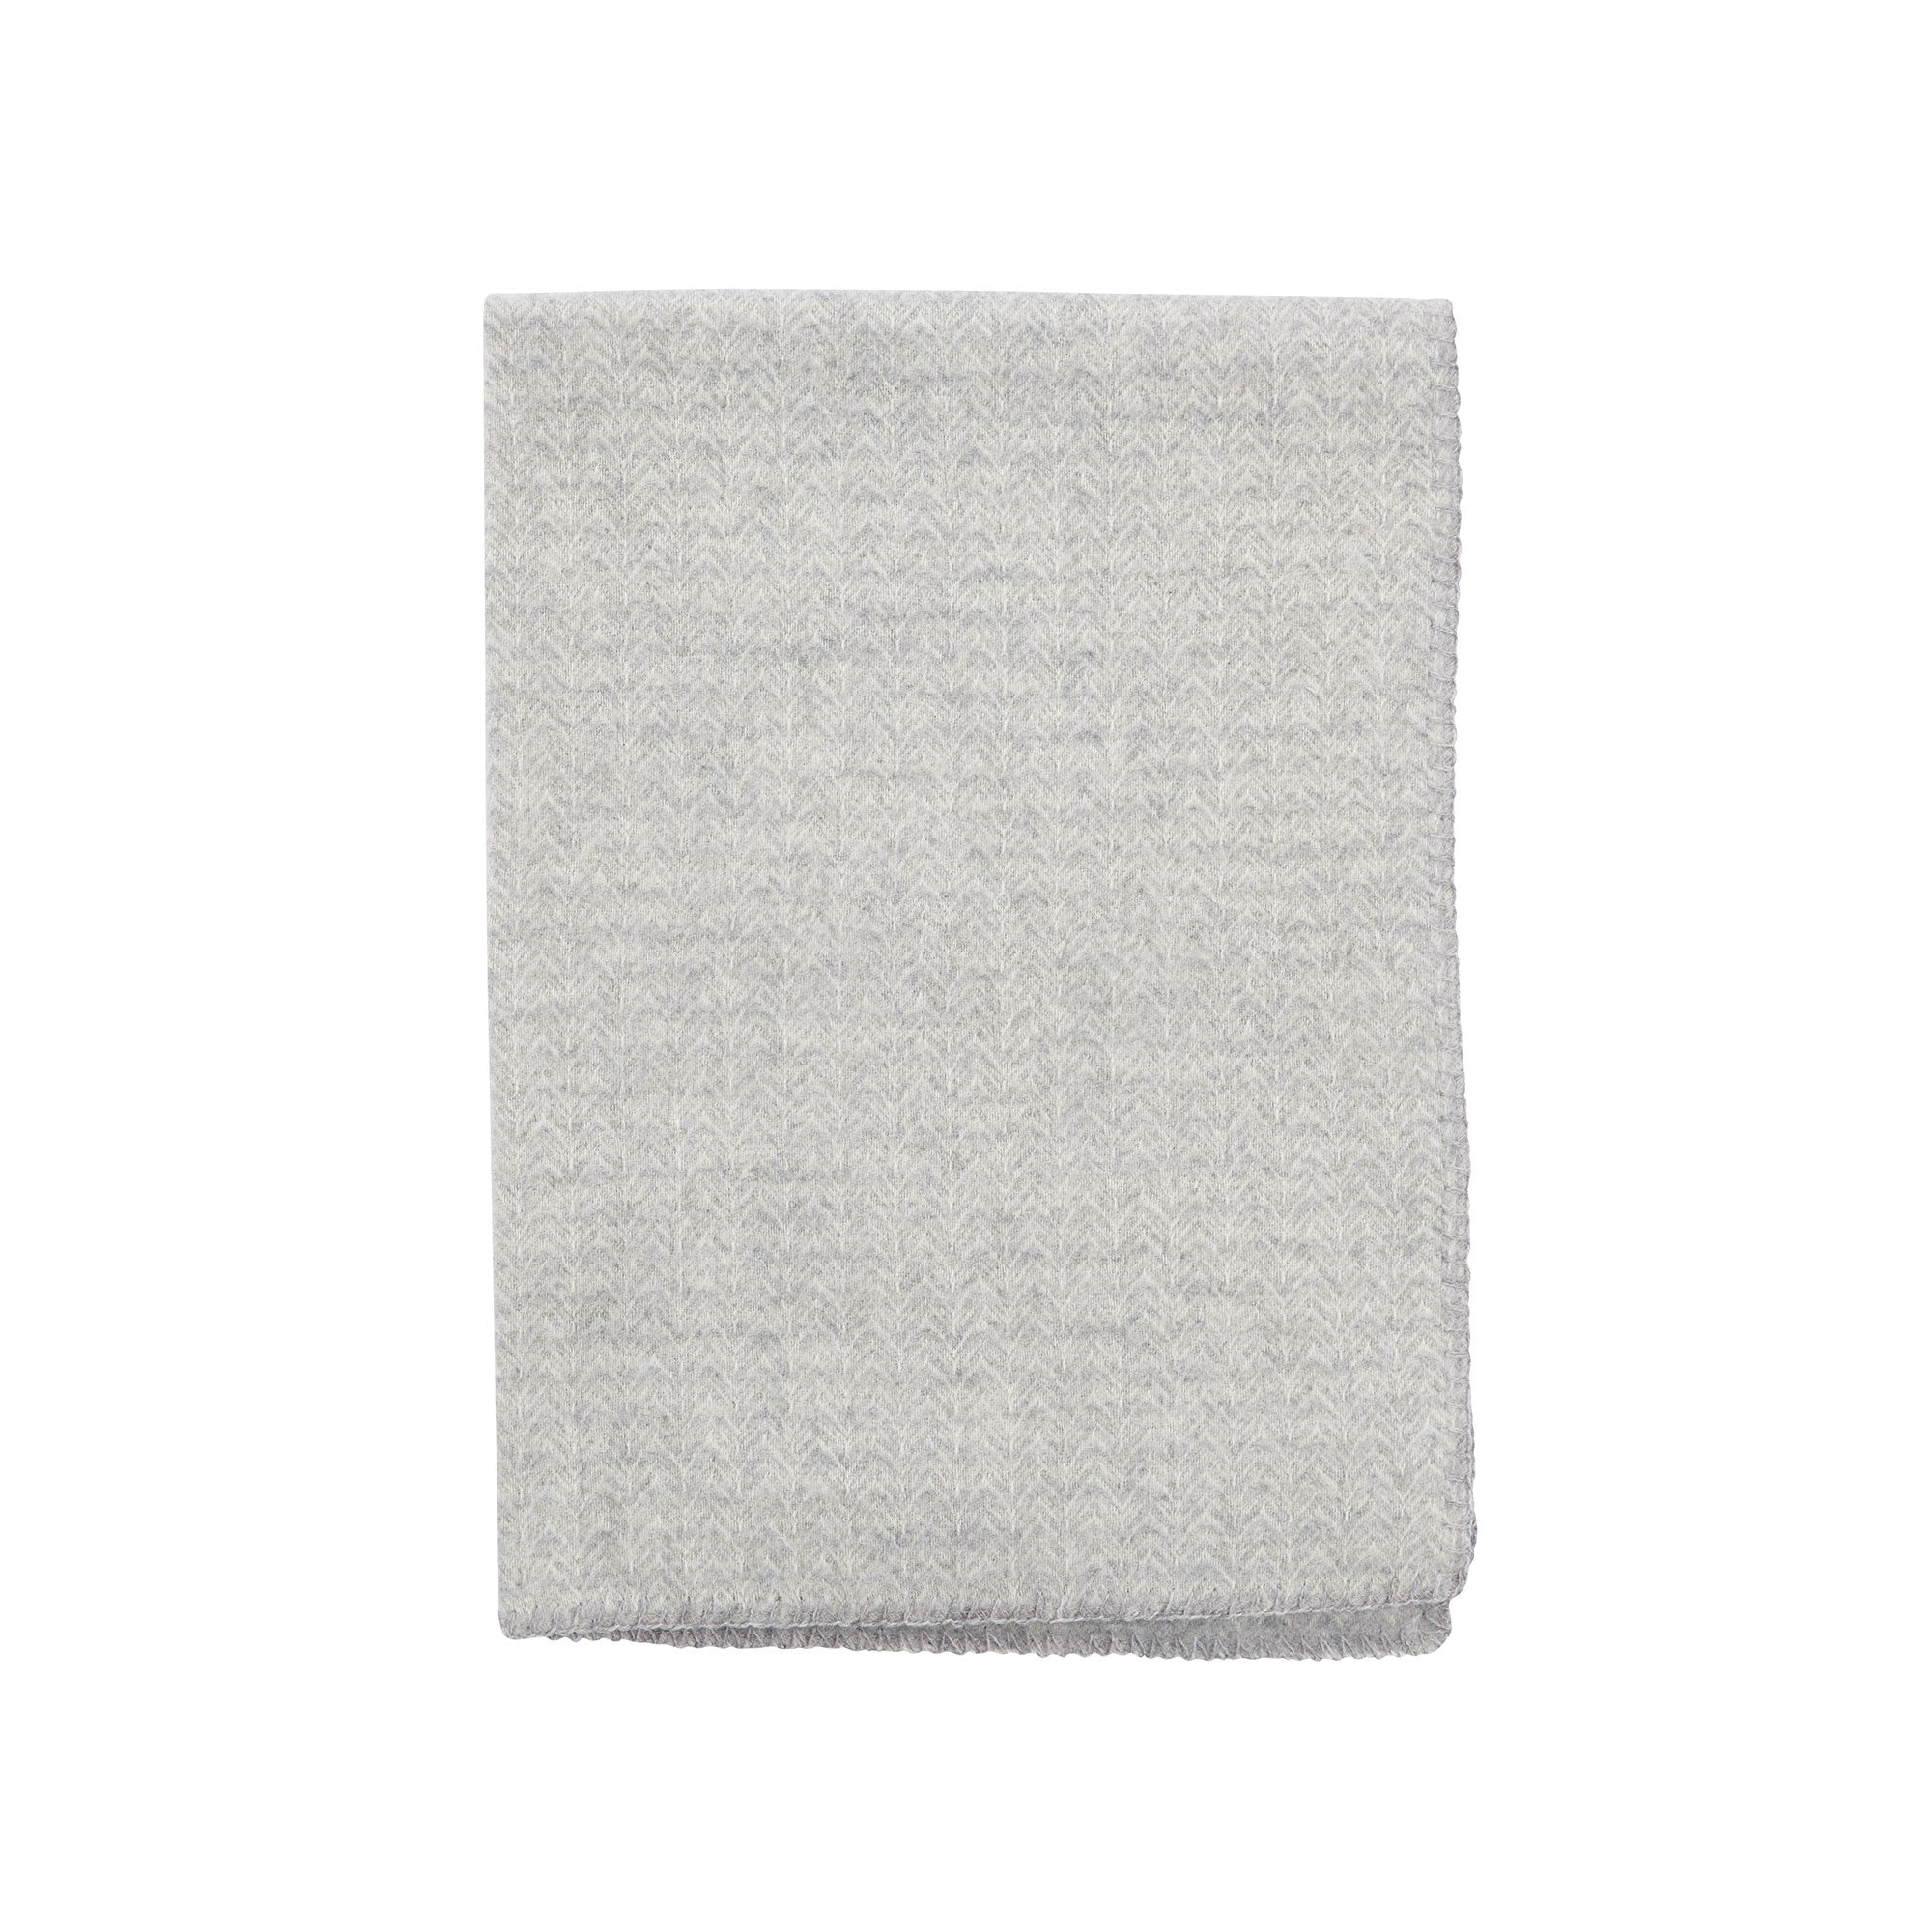 Himalaya Baby Grey 65x90cm Cashmere& Merino Blanket